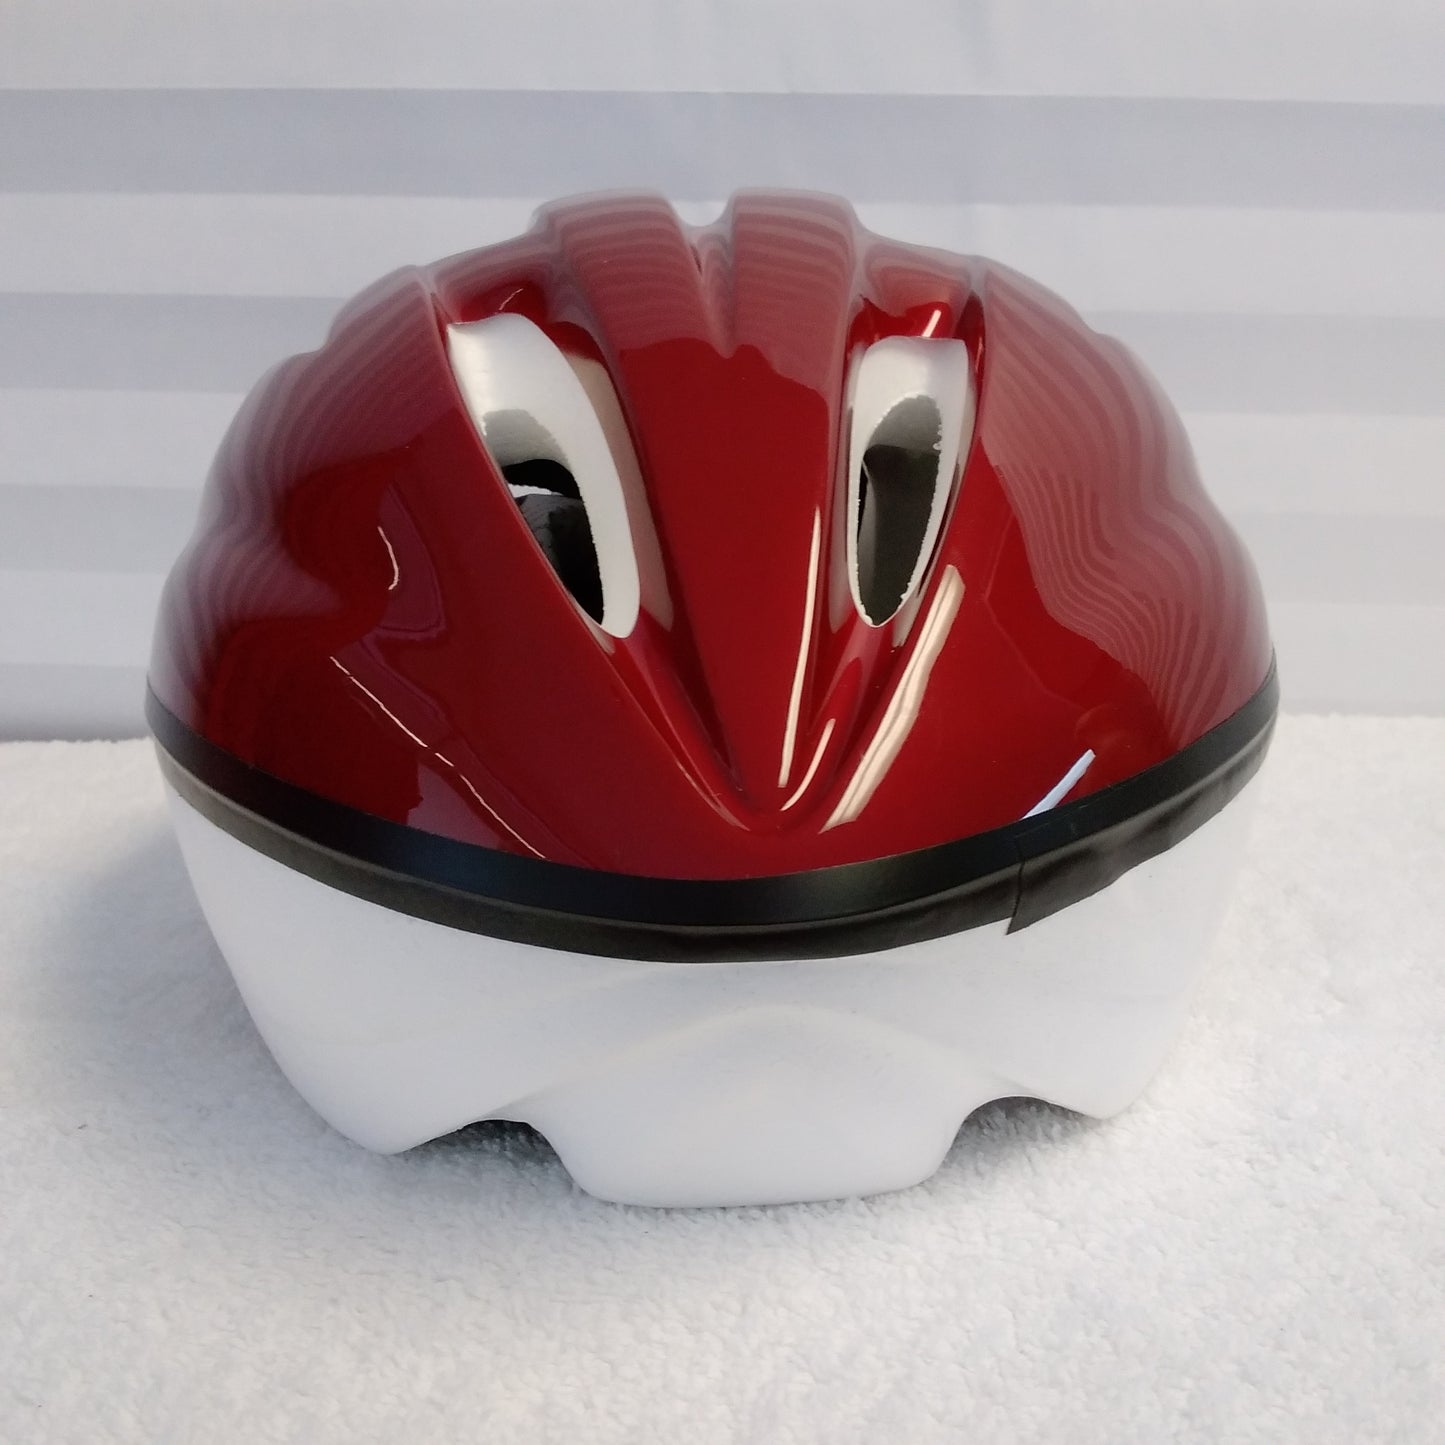 NEW - Helmets R Us Red Bicycle Helmet - Size: L (58-62cm)